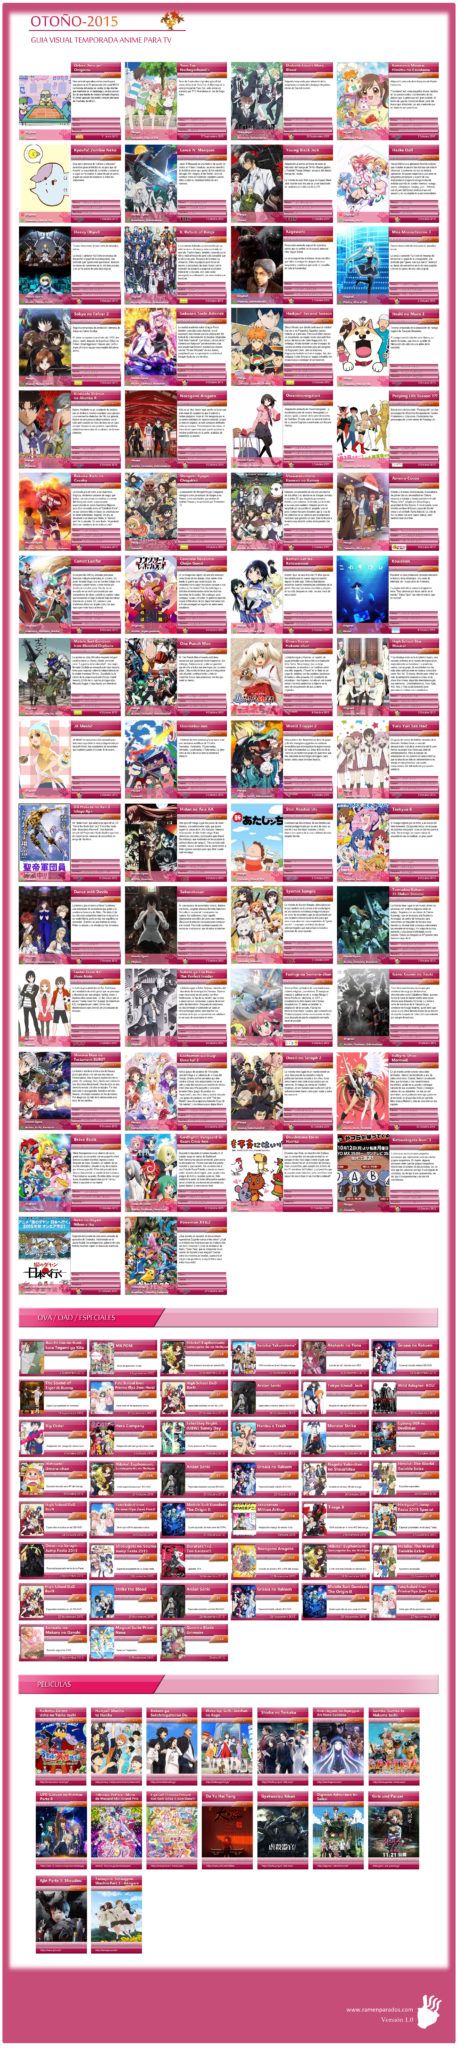 Novedades trimestrales de Anime - Página 3 Guia-visual-anime-otono-15